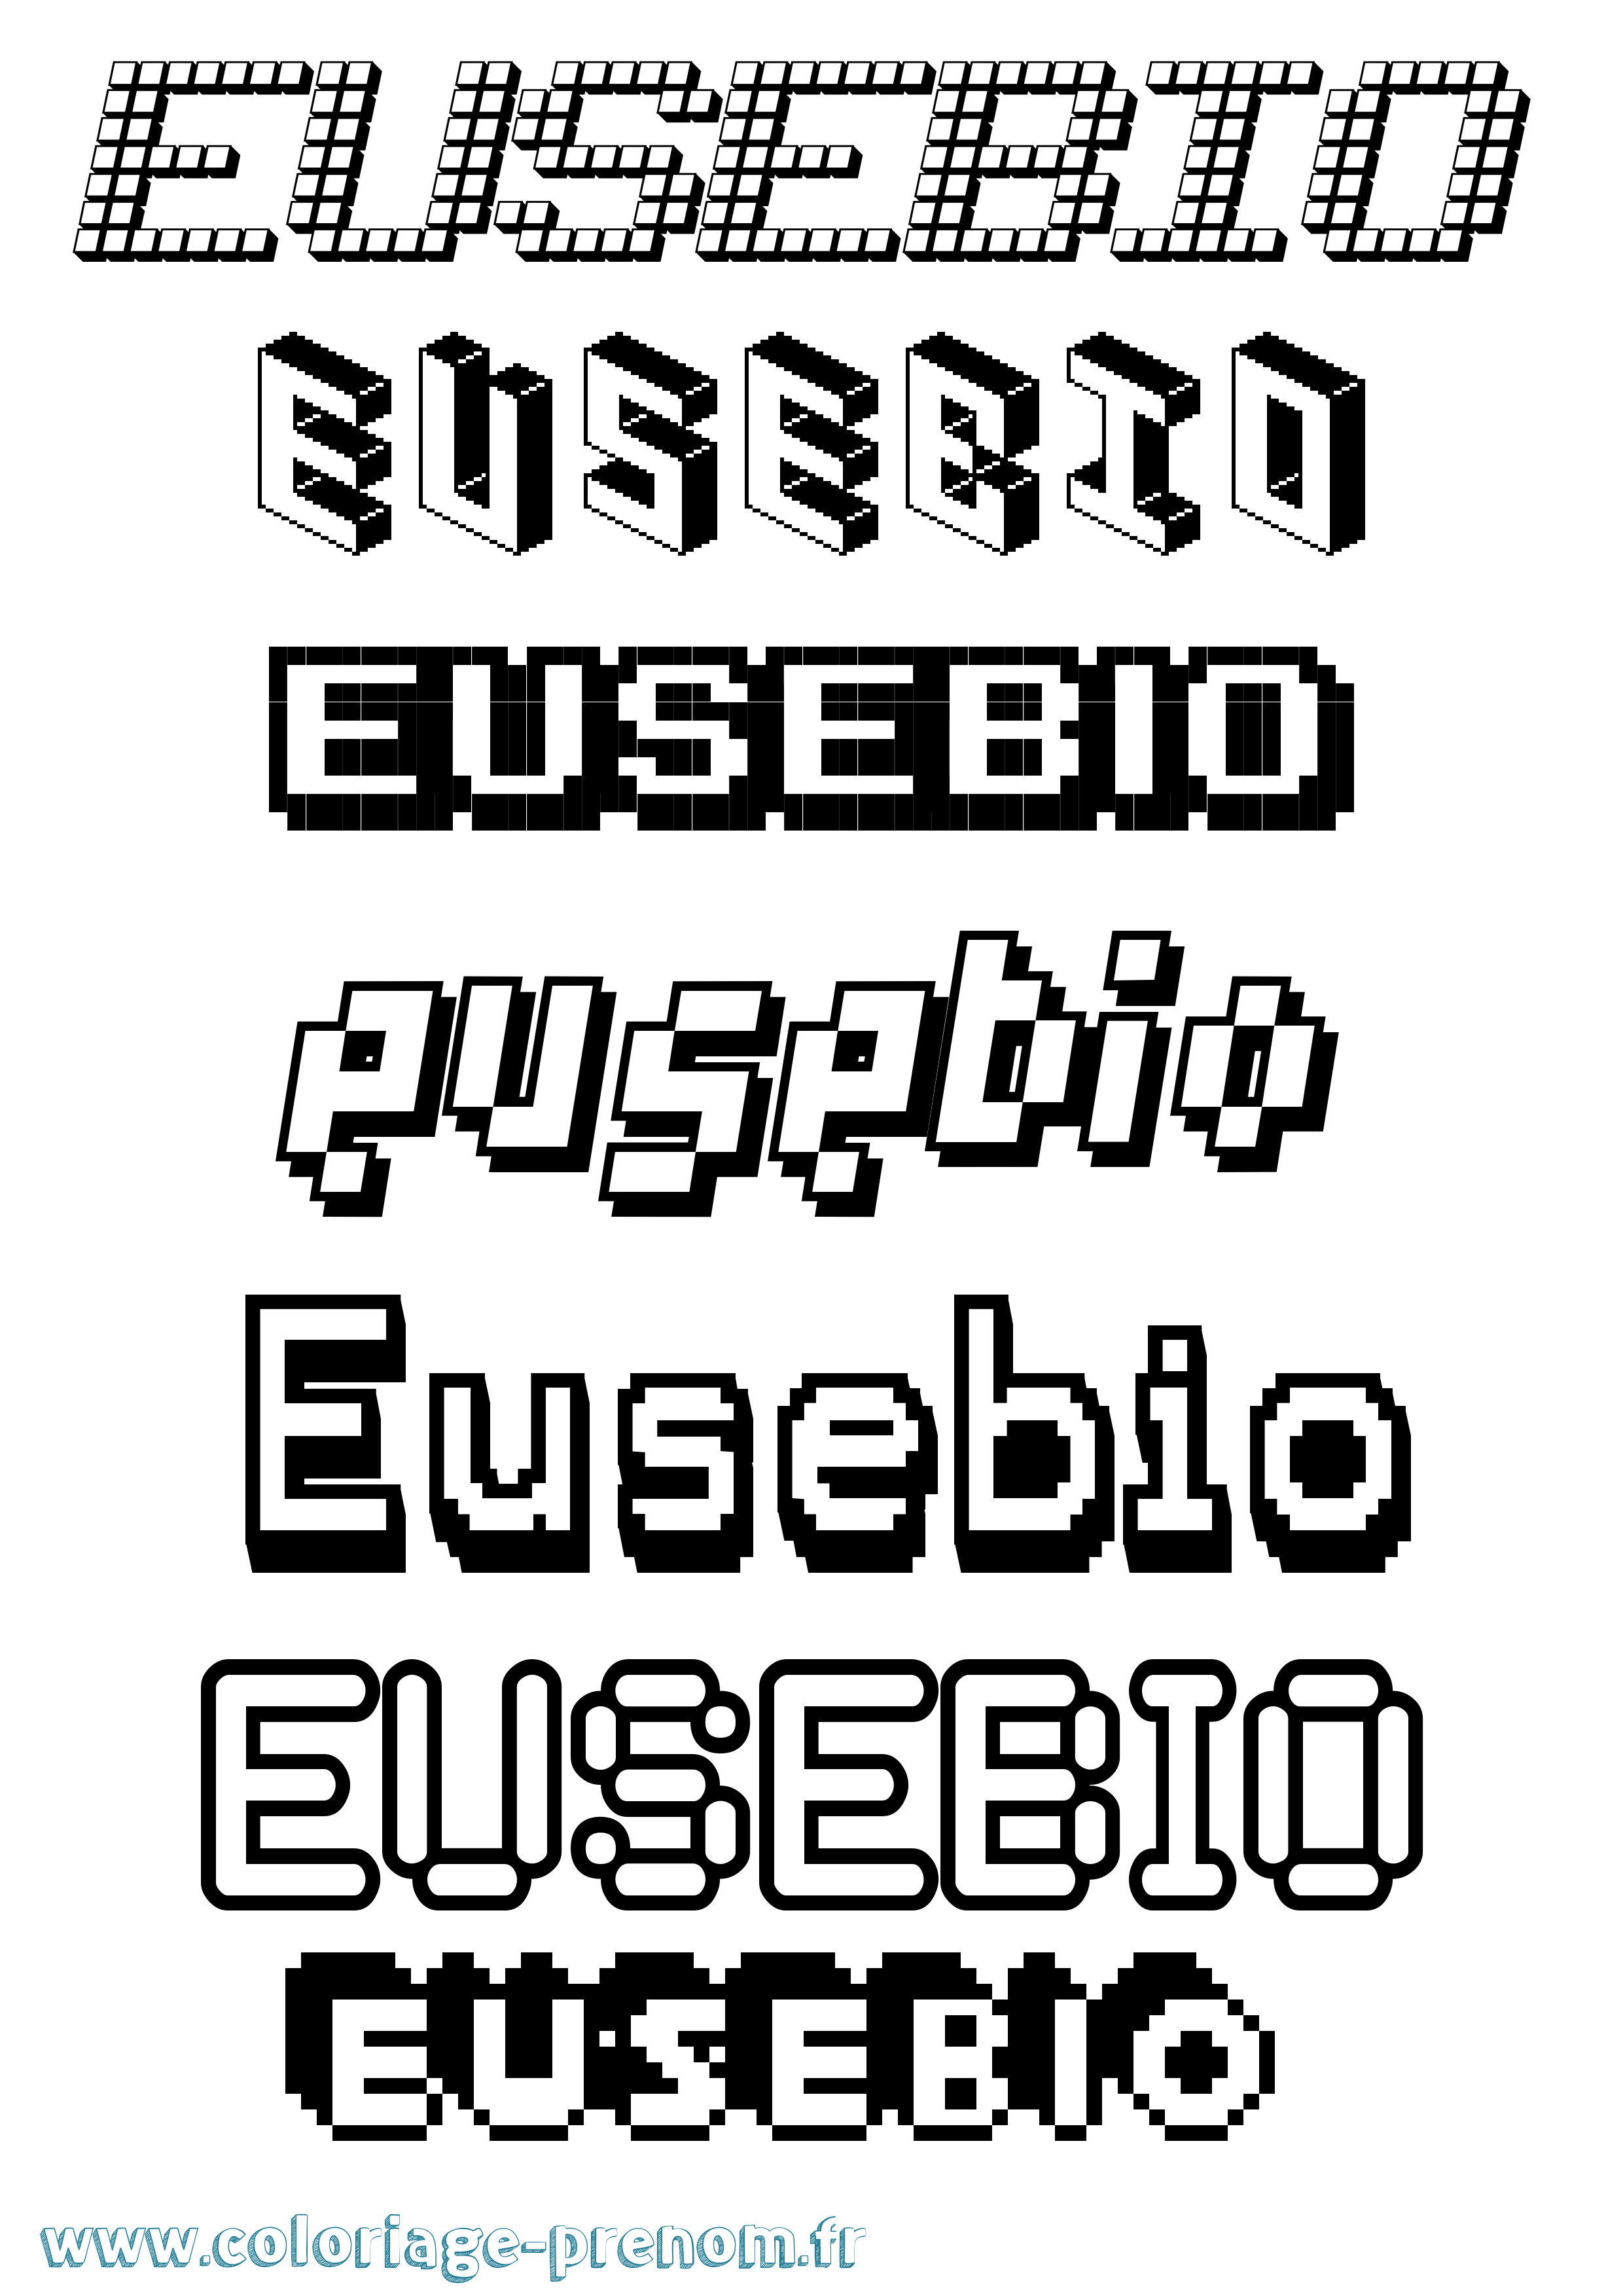 Coloriage prénom Eusebio Pixel